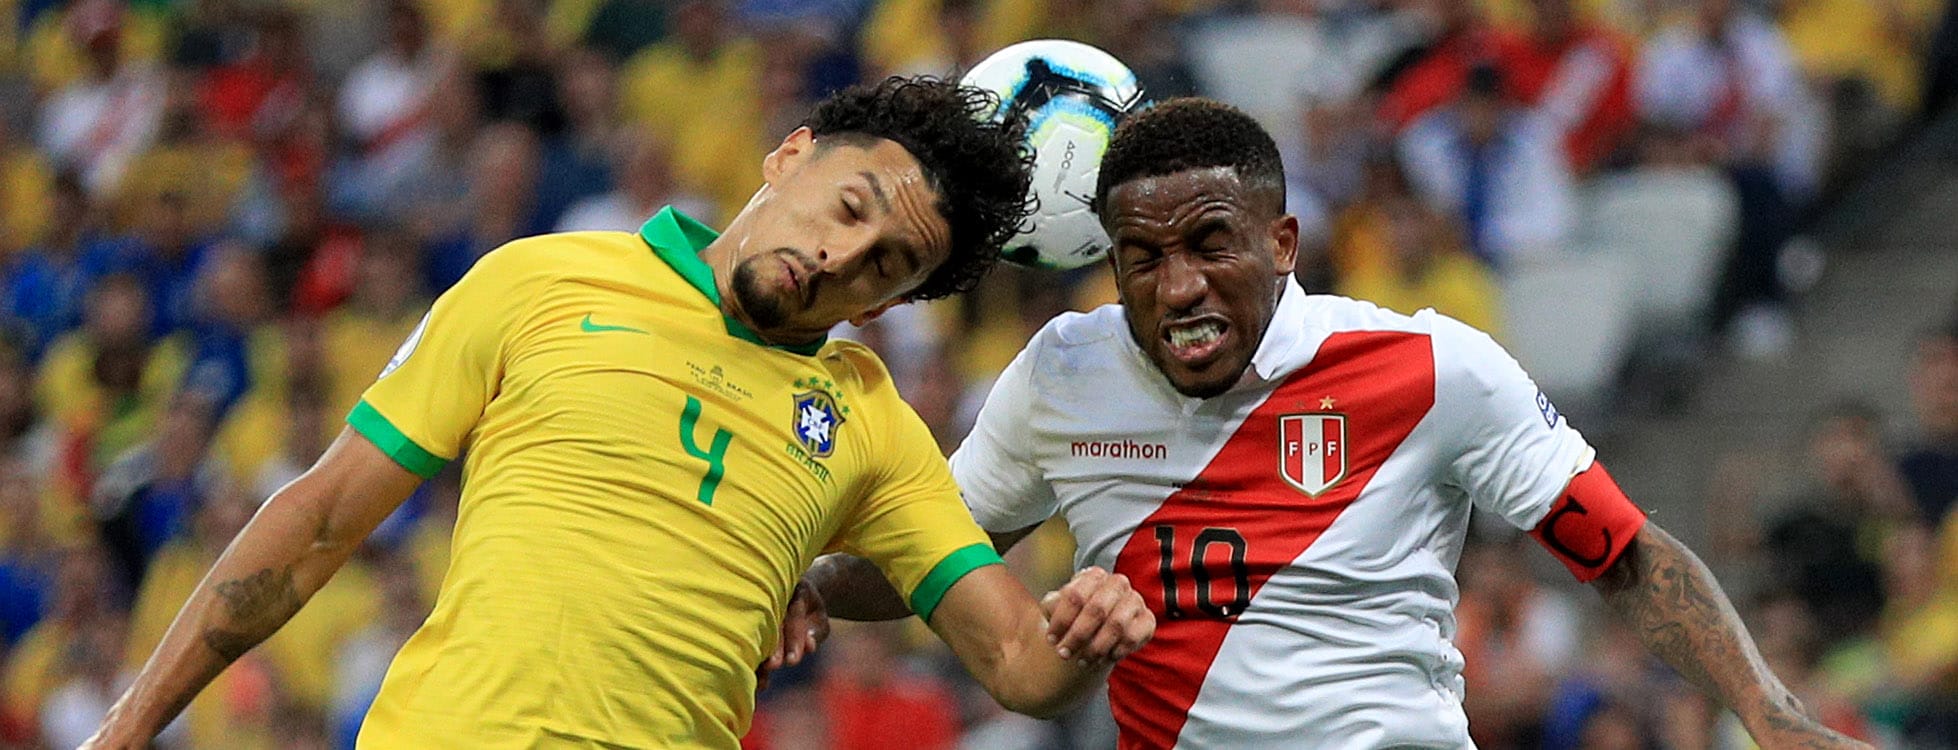 Copa America-Finale: Brasilien - Peru, Underdog fordert den Gastgeber